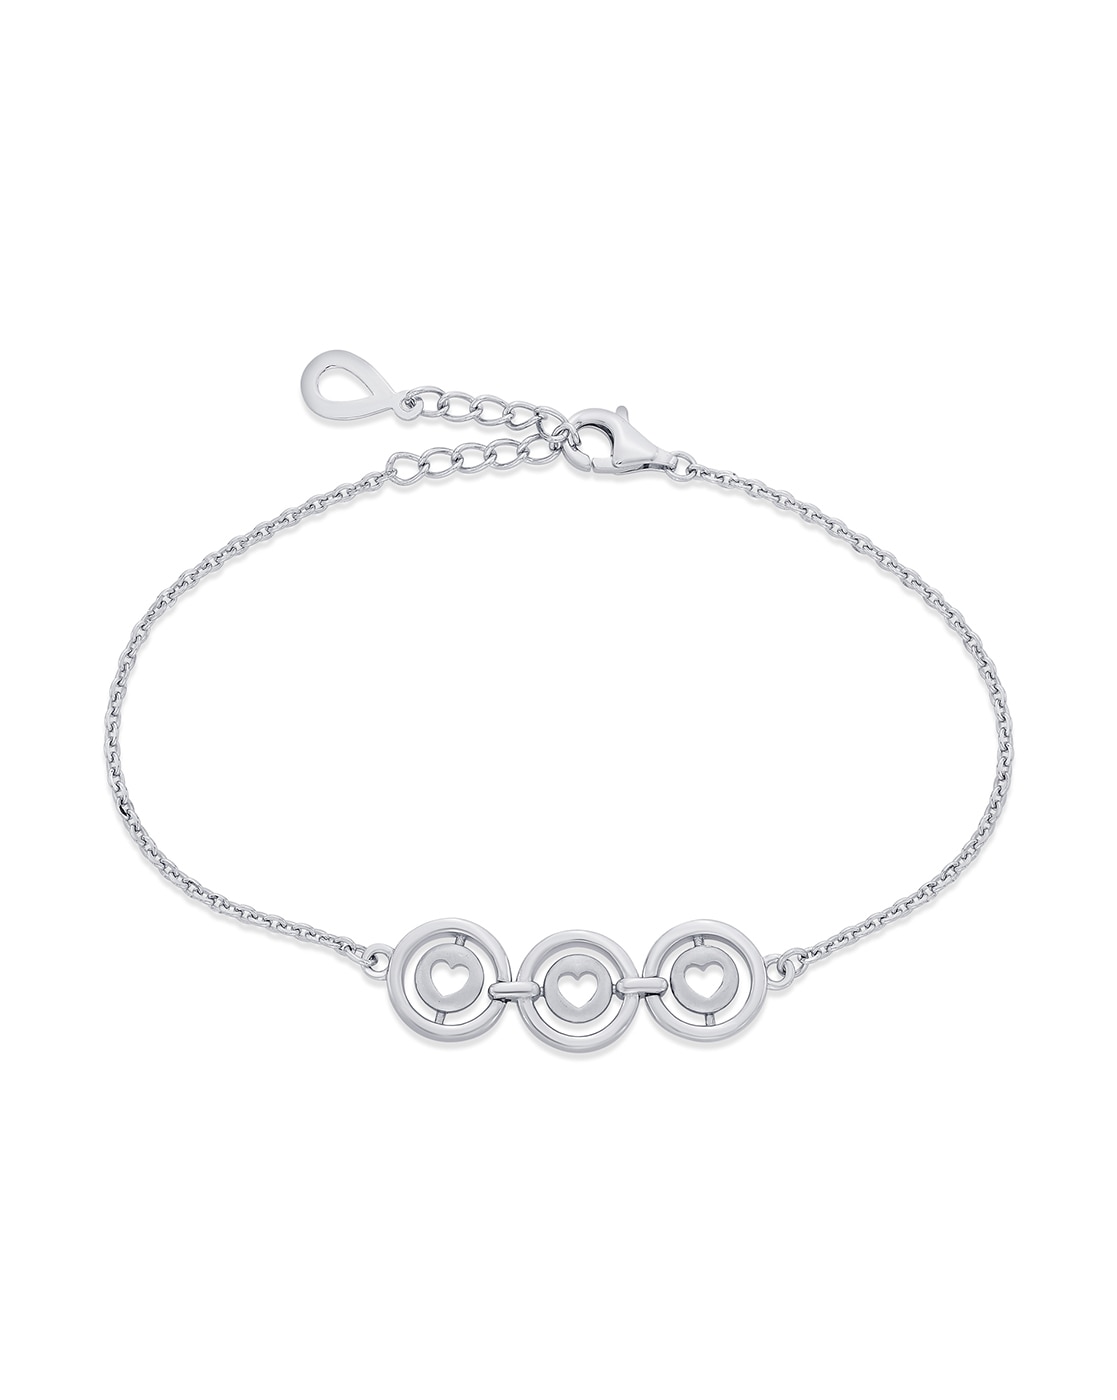 Buy GIVA 925 Sterling Silver Heartlock Bracelet Online At Best Price   Tata CLiQ